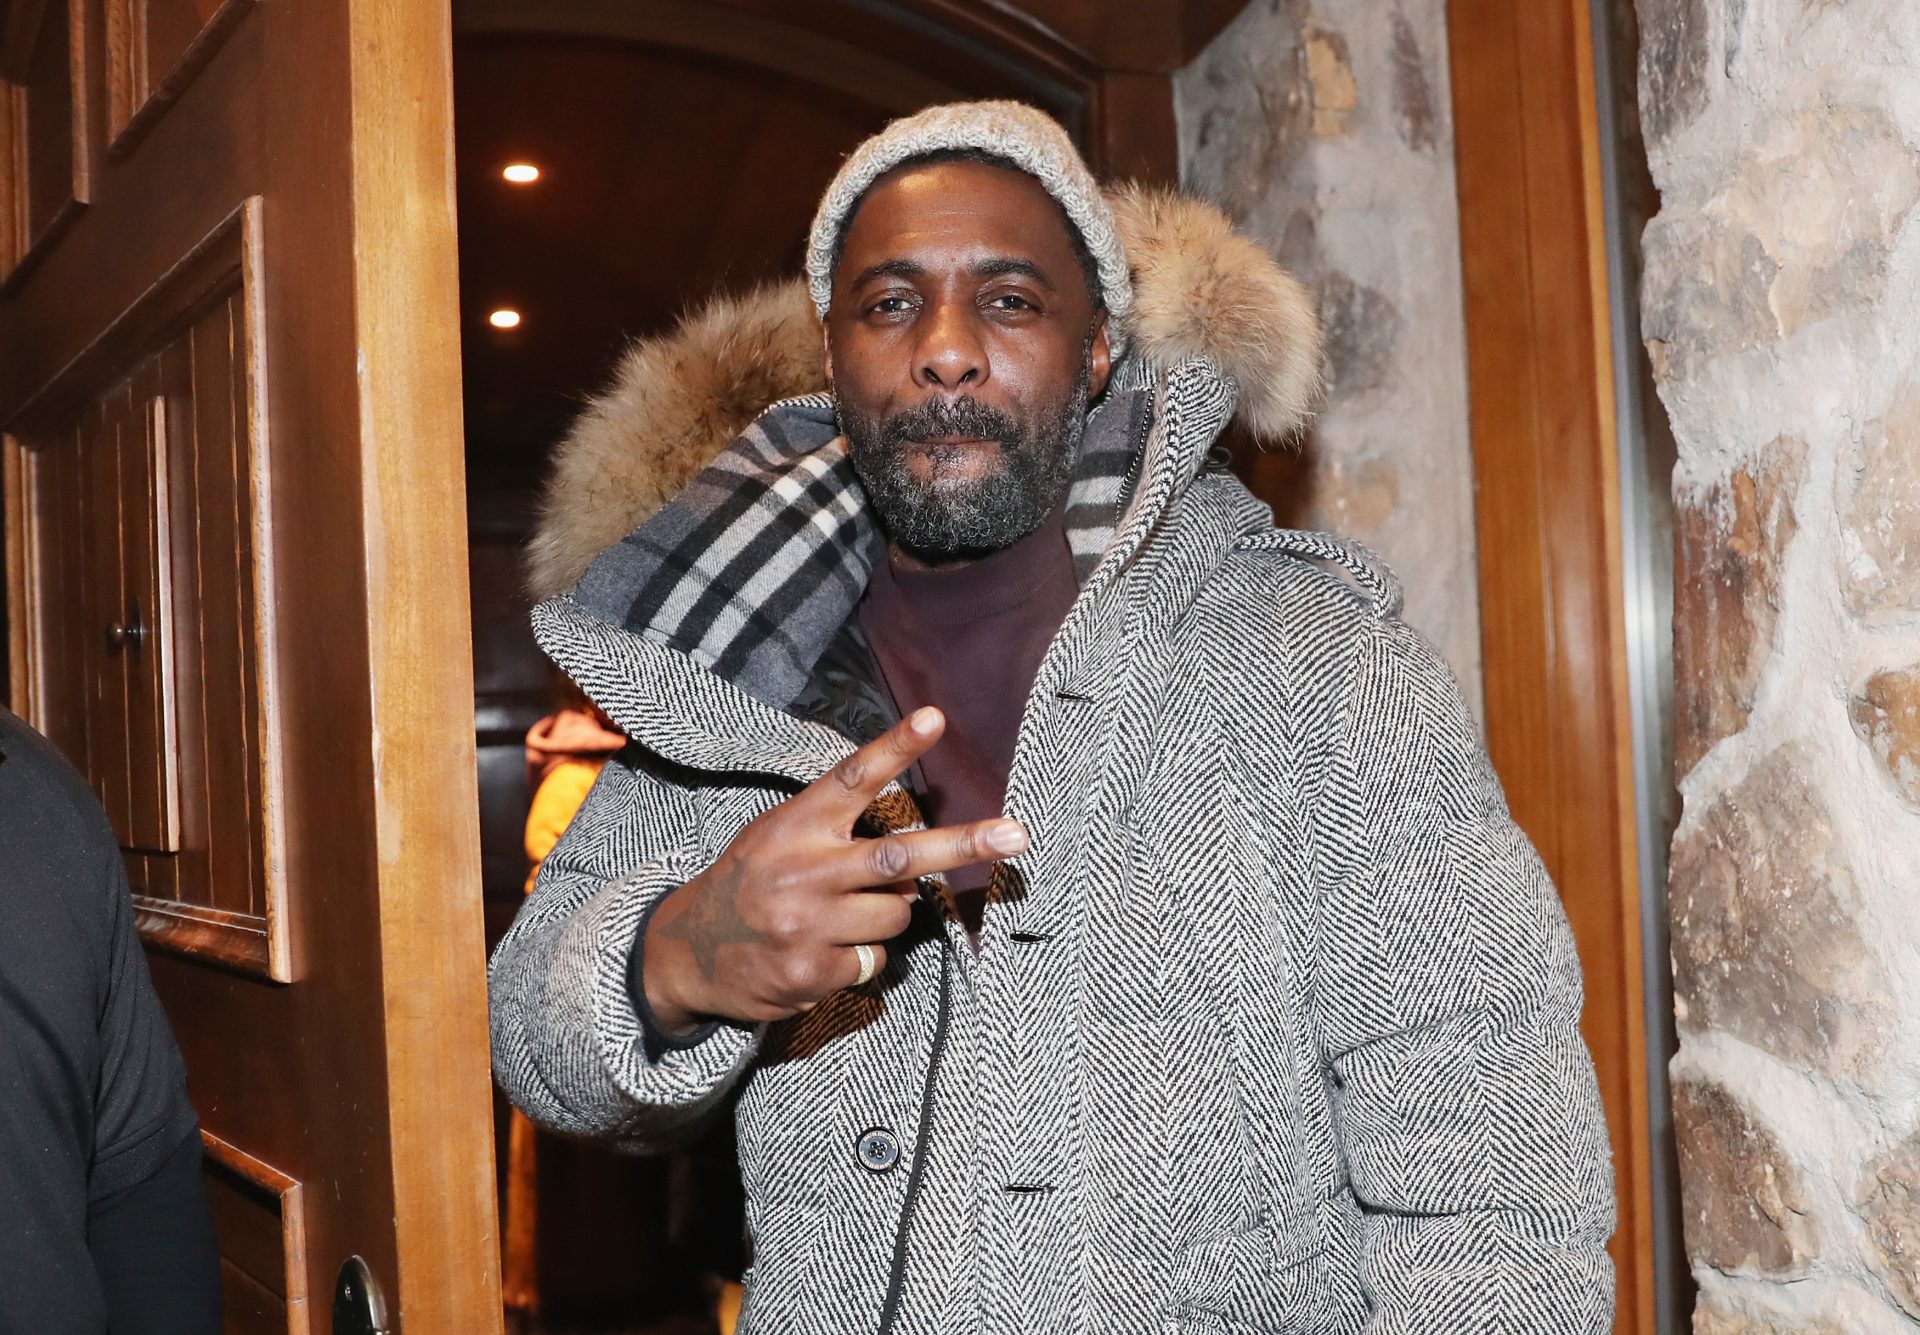 A night of brown sugar at Sundance: Common, Idris Elba, John Legend